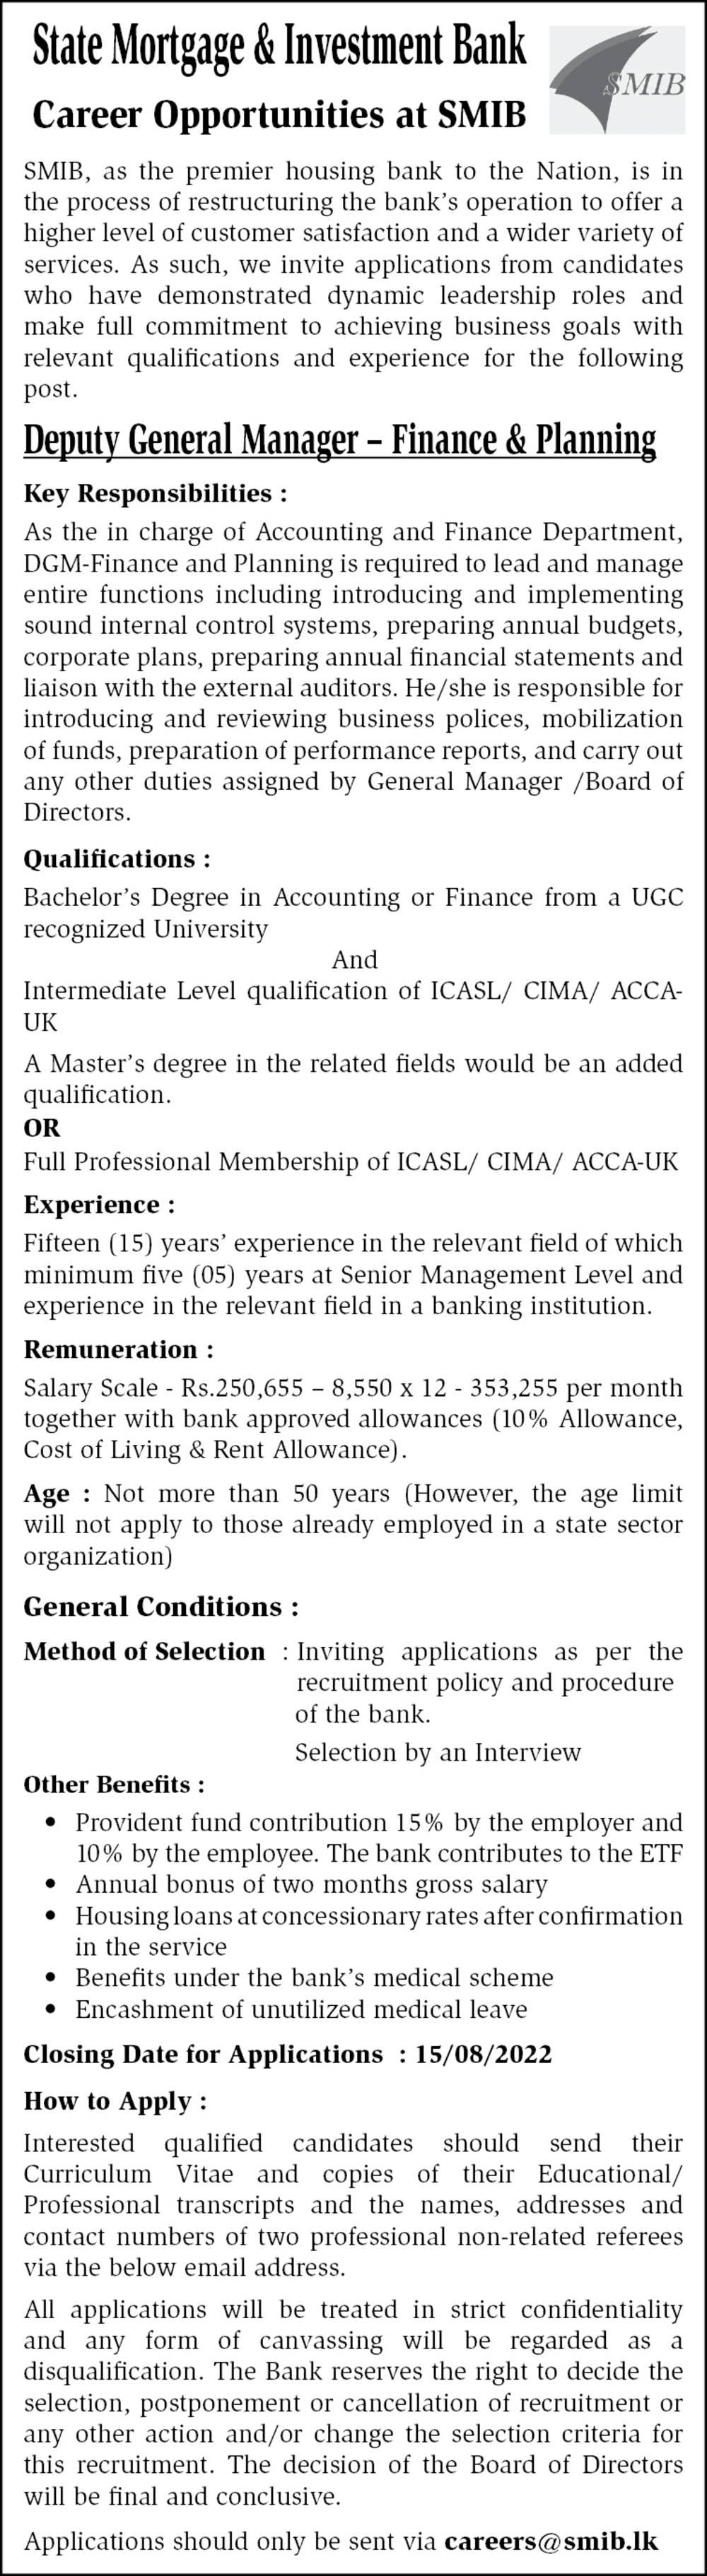 Deputy General Manager Job Vacancy 2022 in SMIB Bank Jobs Vacancies